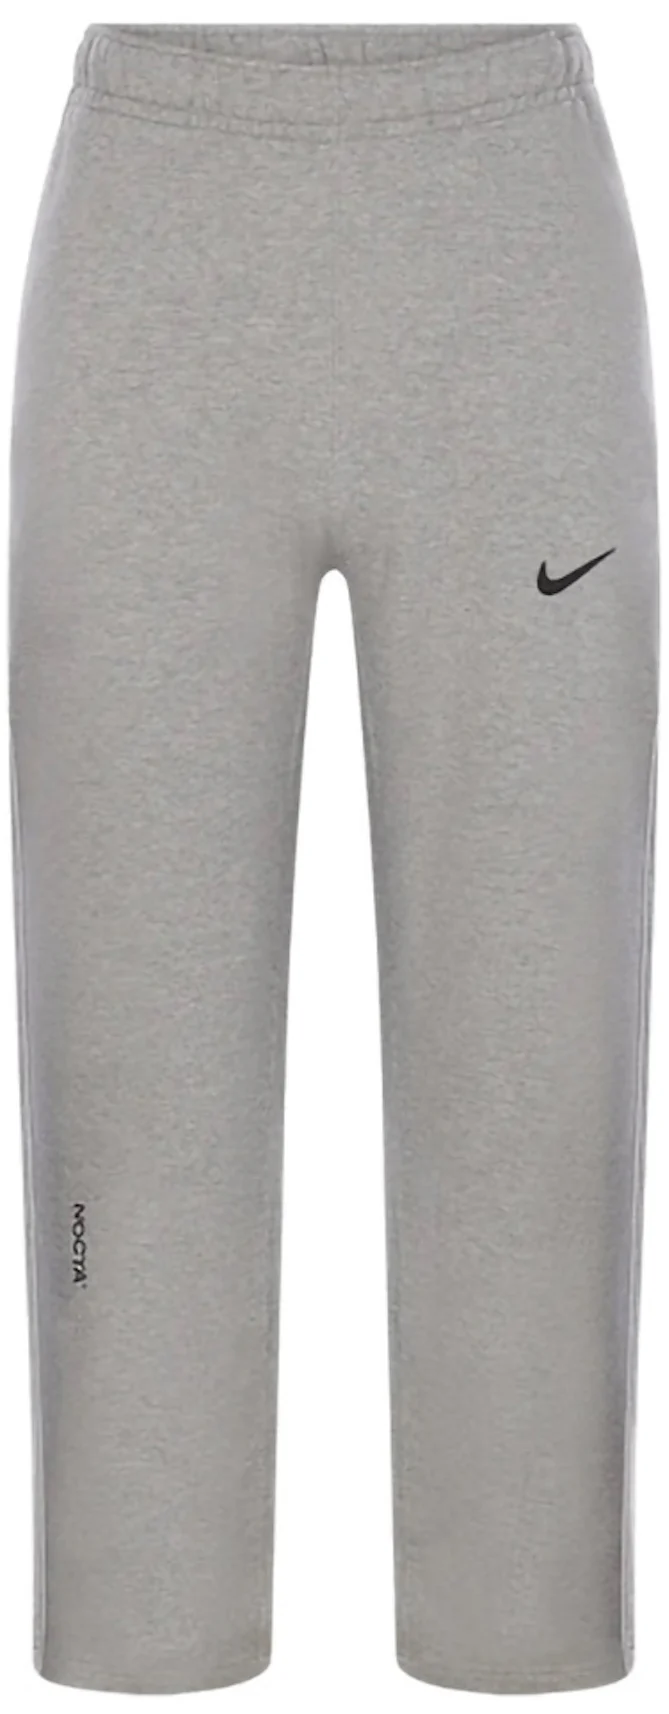 Nike NRG Sweatpant Dark Grey Heather Men's - US